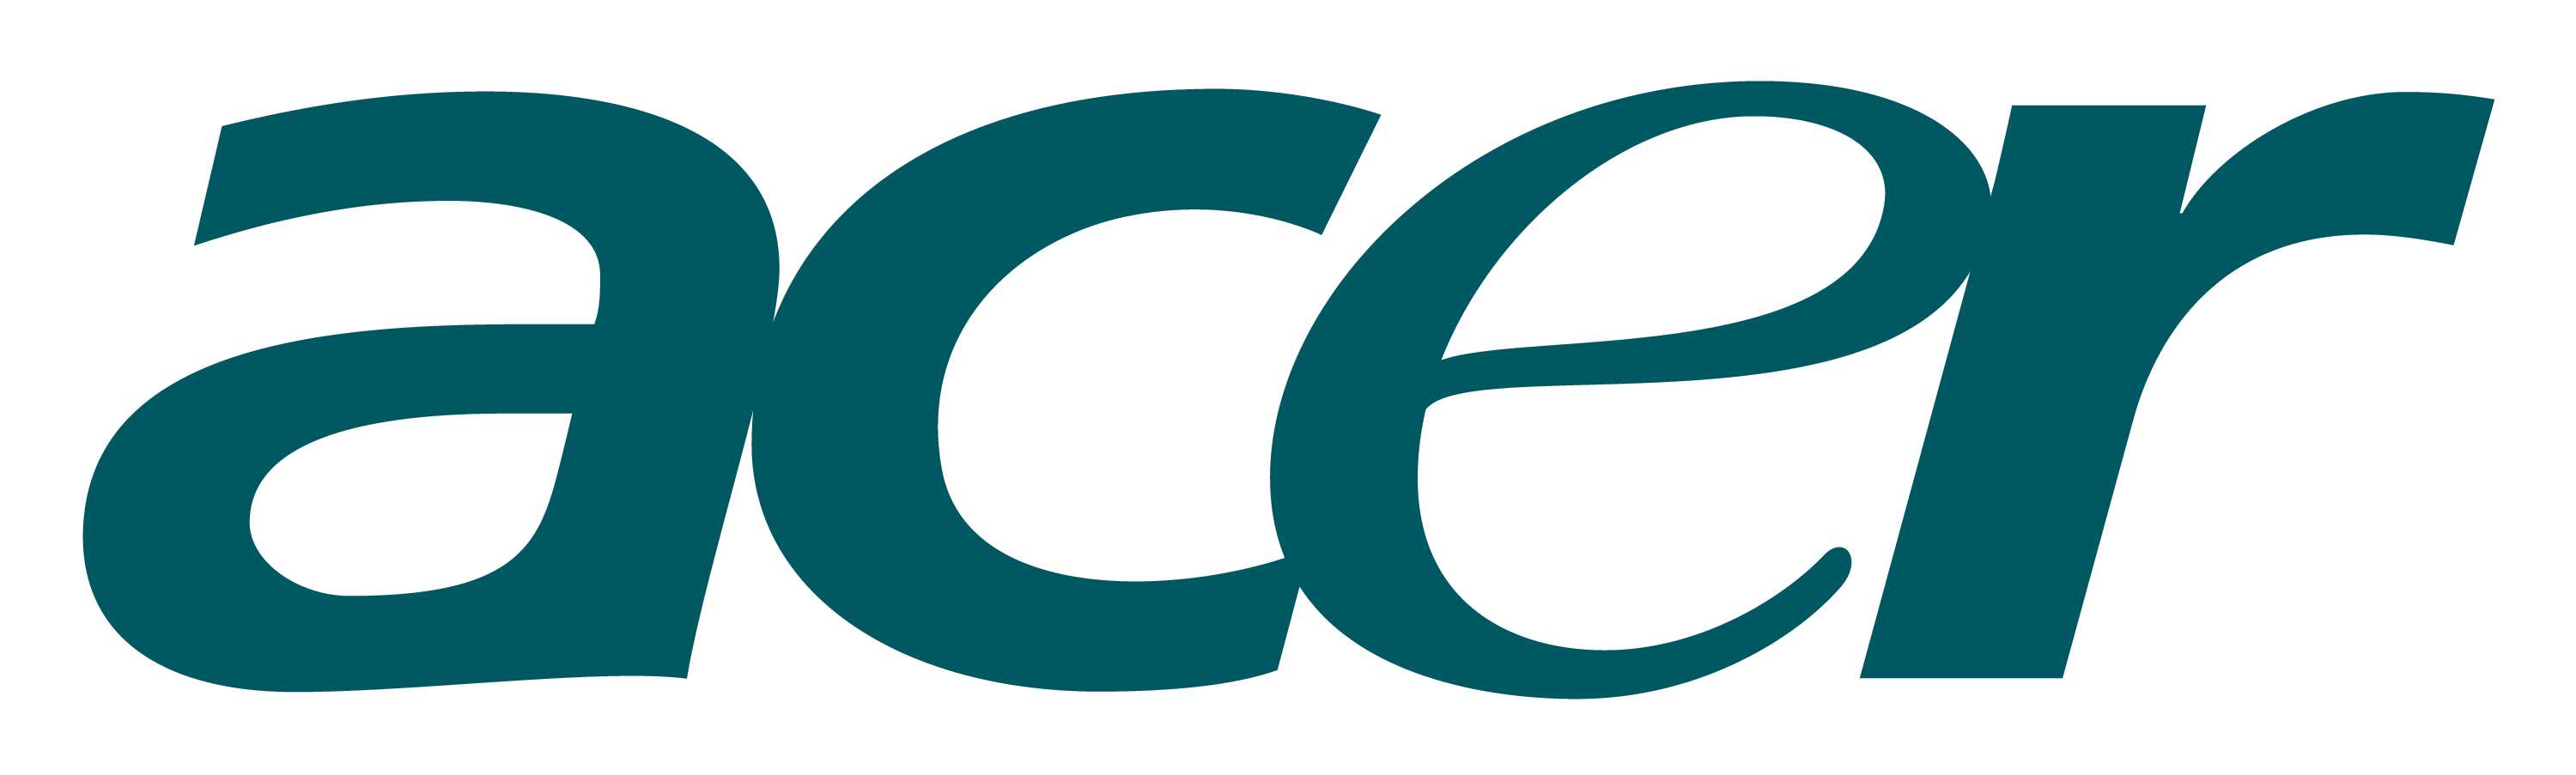 Apcer Logo photo - 1